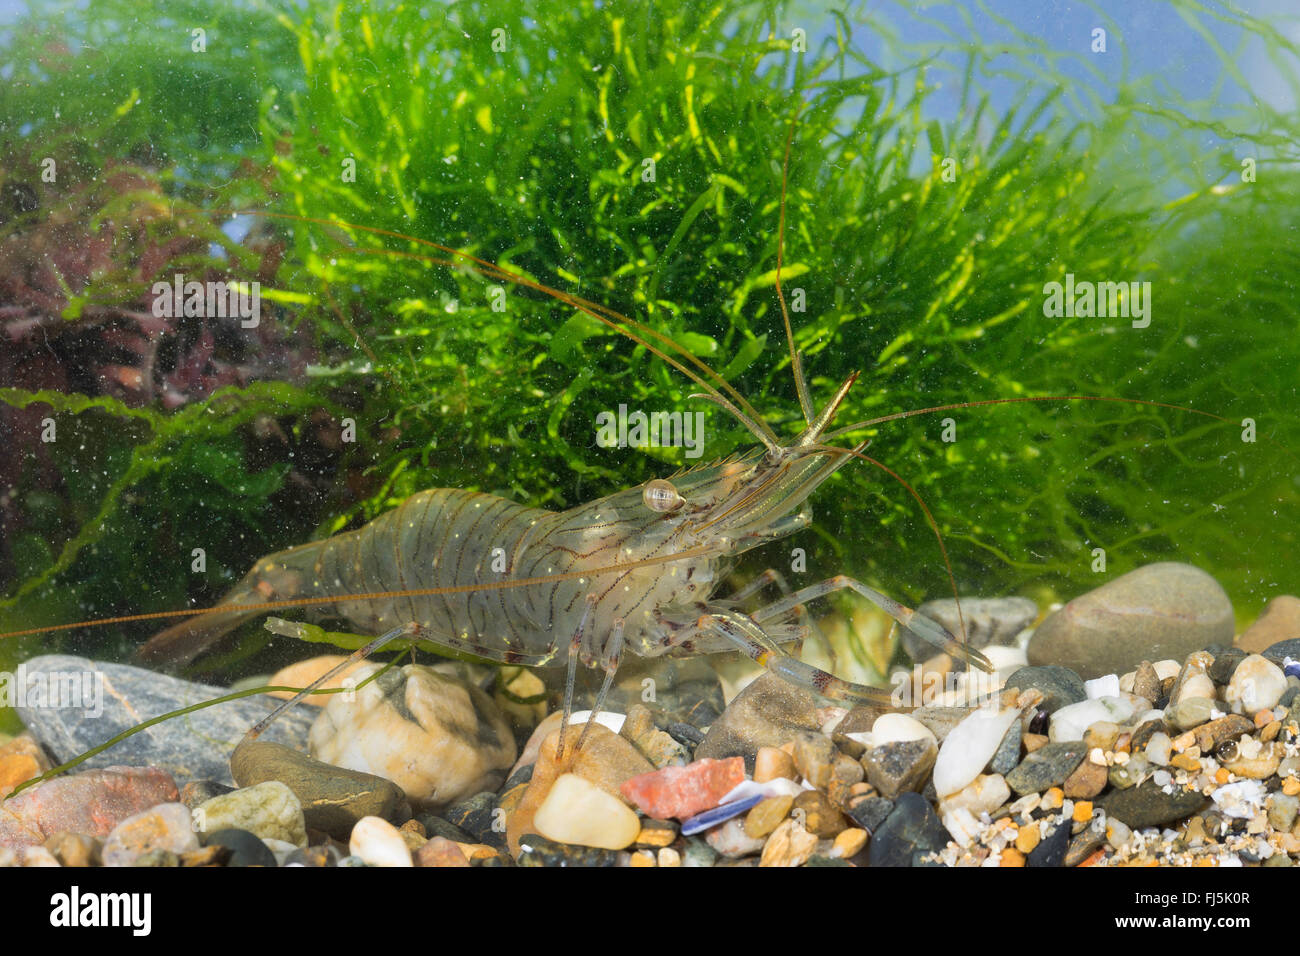 common prawn (Palaemon serratus, Palaemon rostratus, Palaemon trillianus, Leander serratus), on the ground Stock Photo